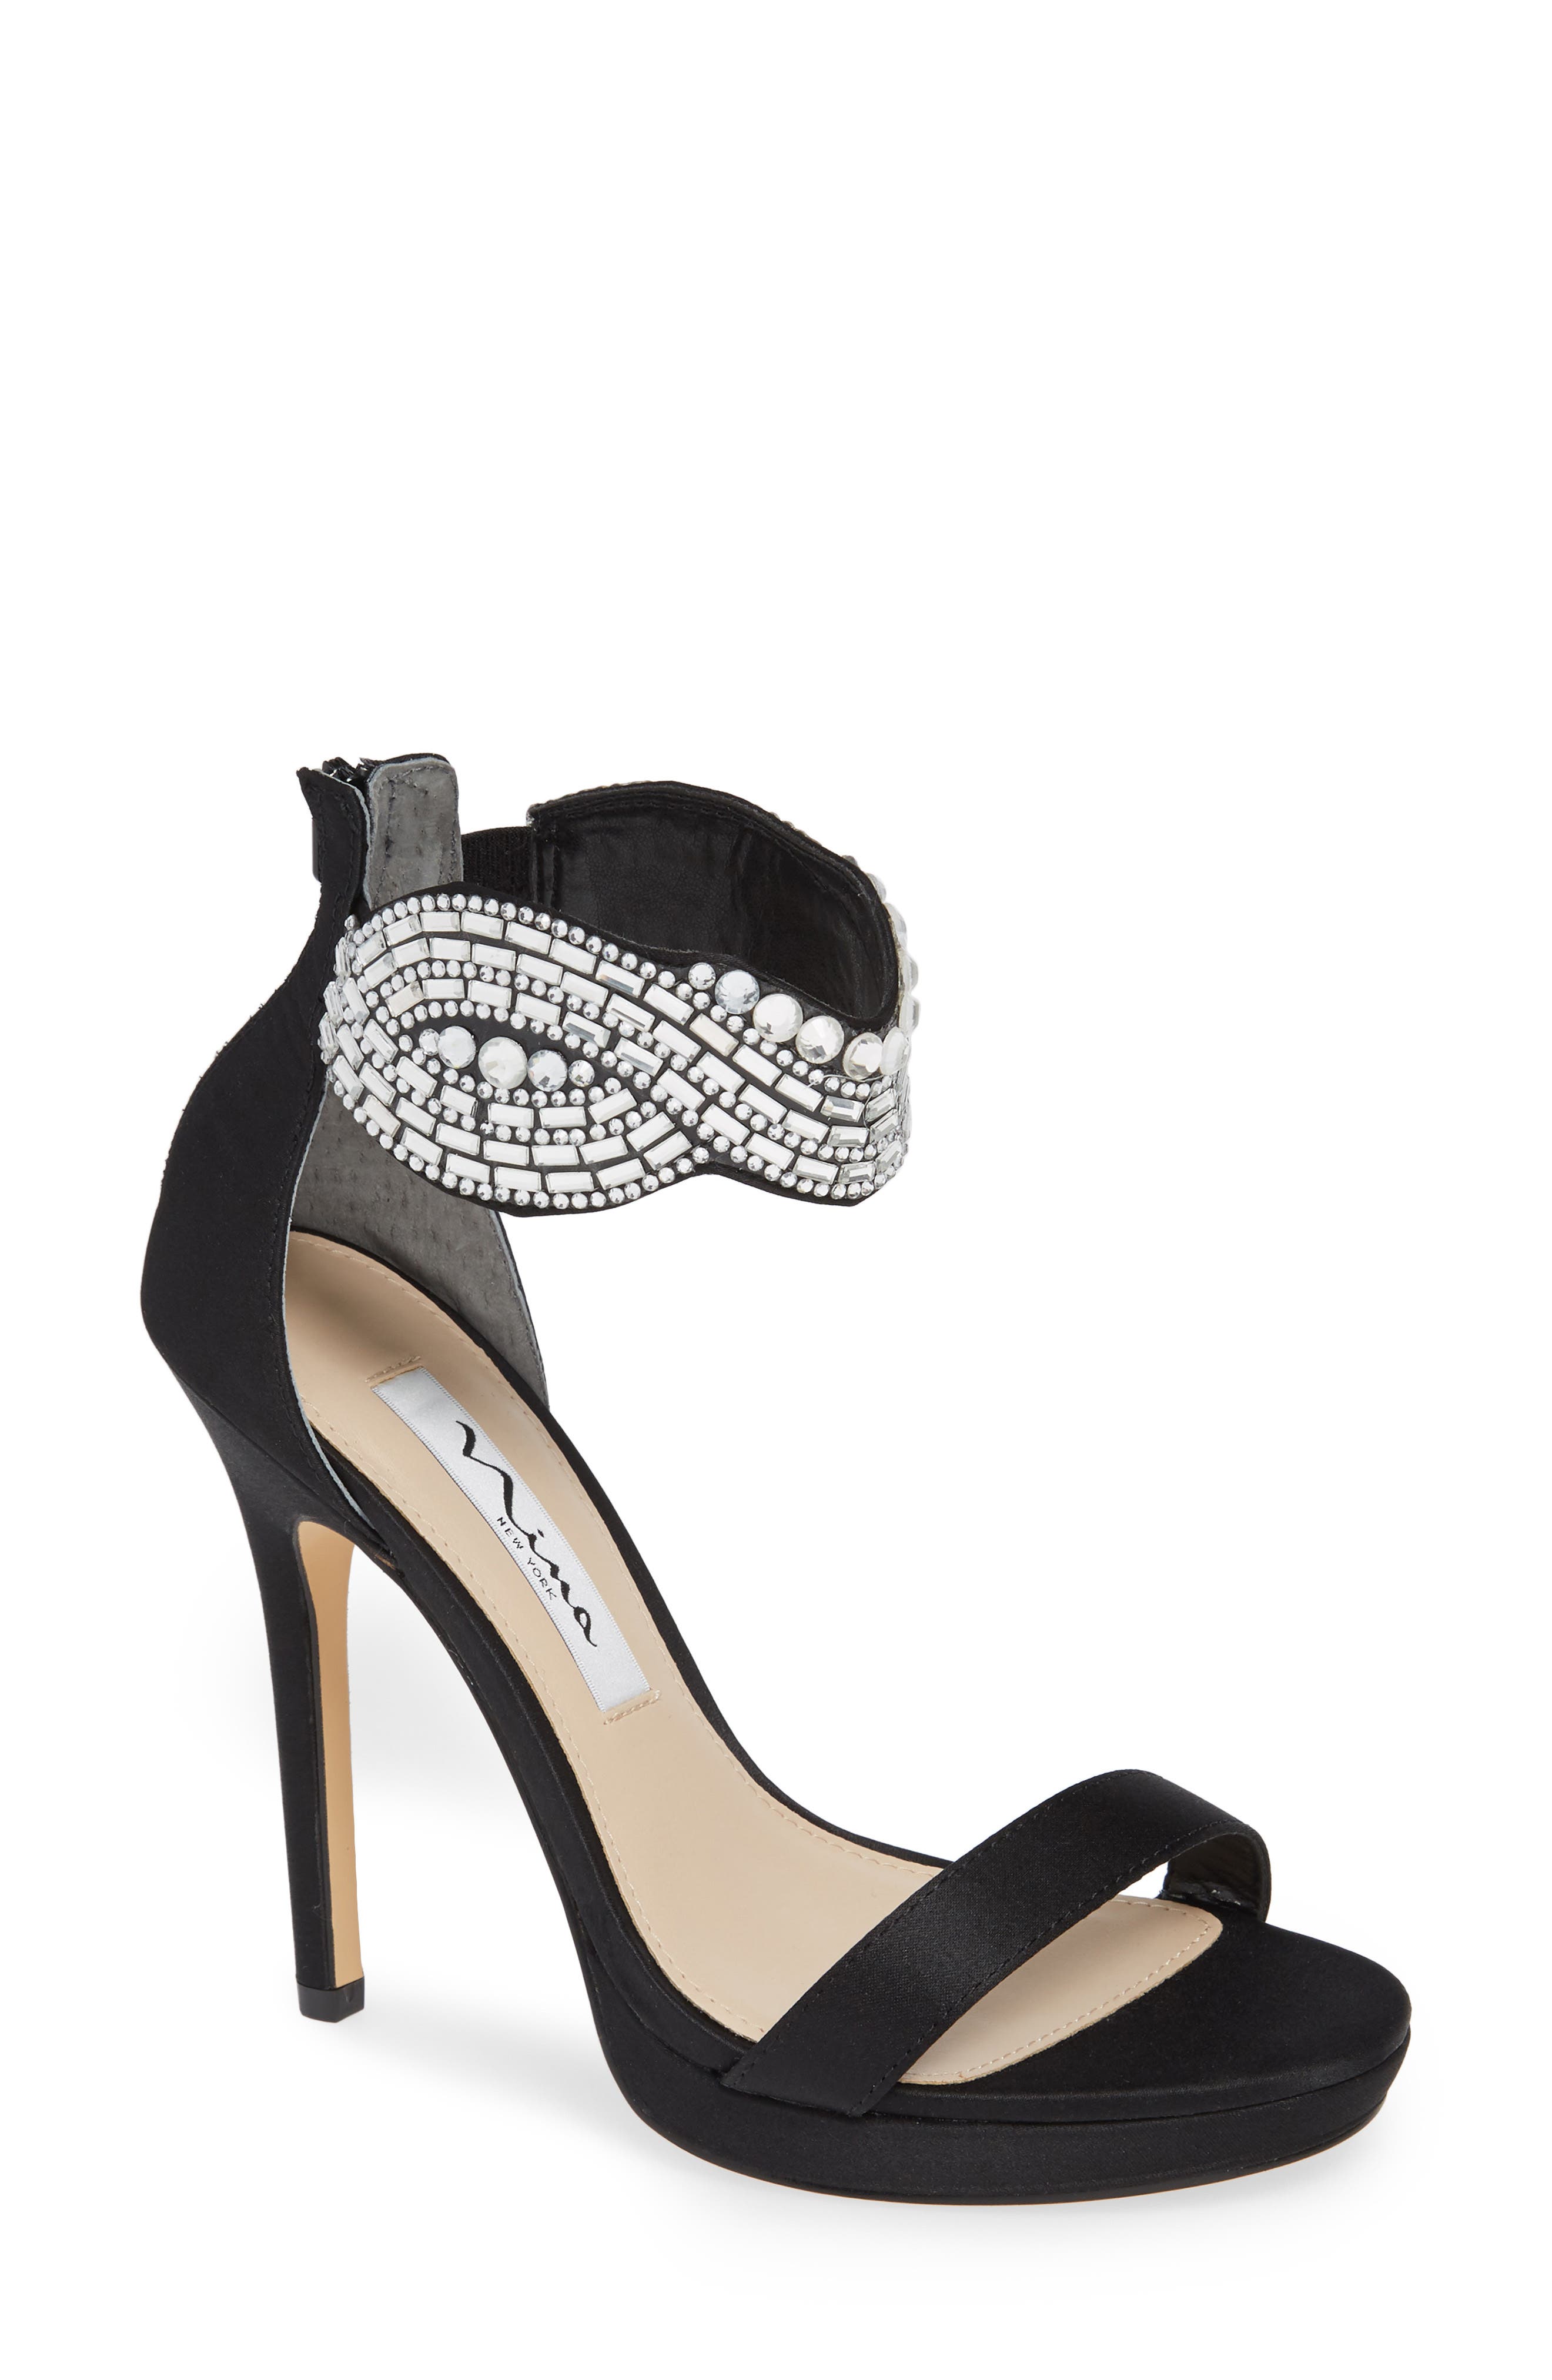 UPC 716142077892 product image for Women's Nina Fayth Jeweled Ankle Cuff Sandal, Size 6.5 M - Black | upcitemdb.com